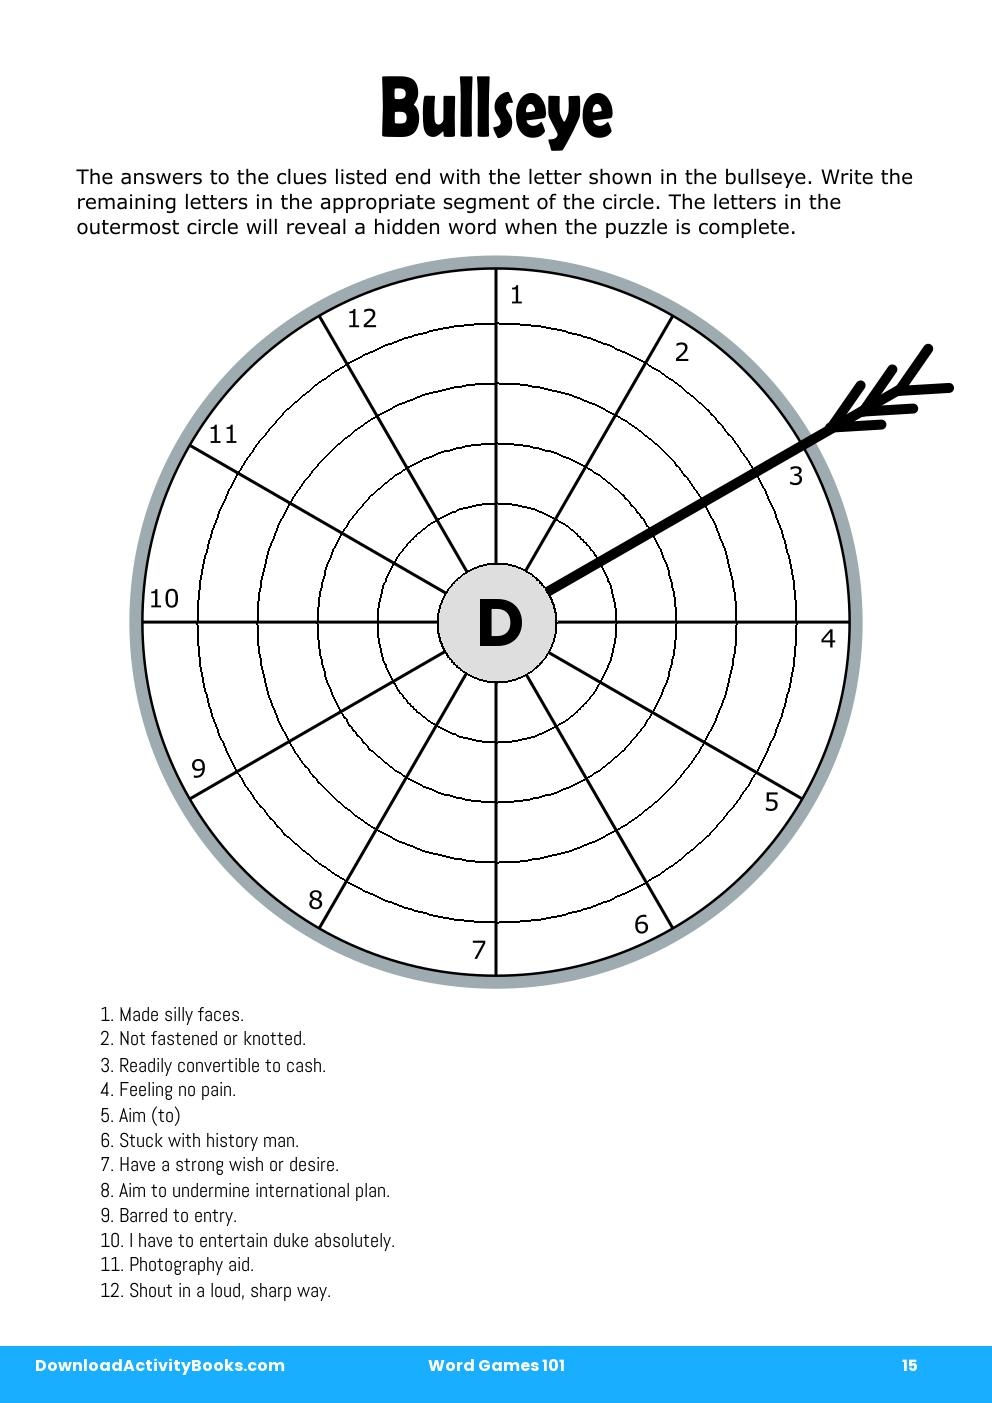 Bullseye in Word Games 101